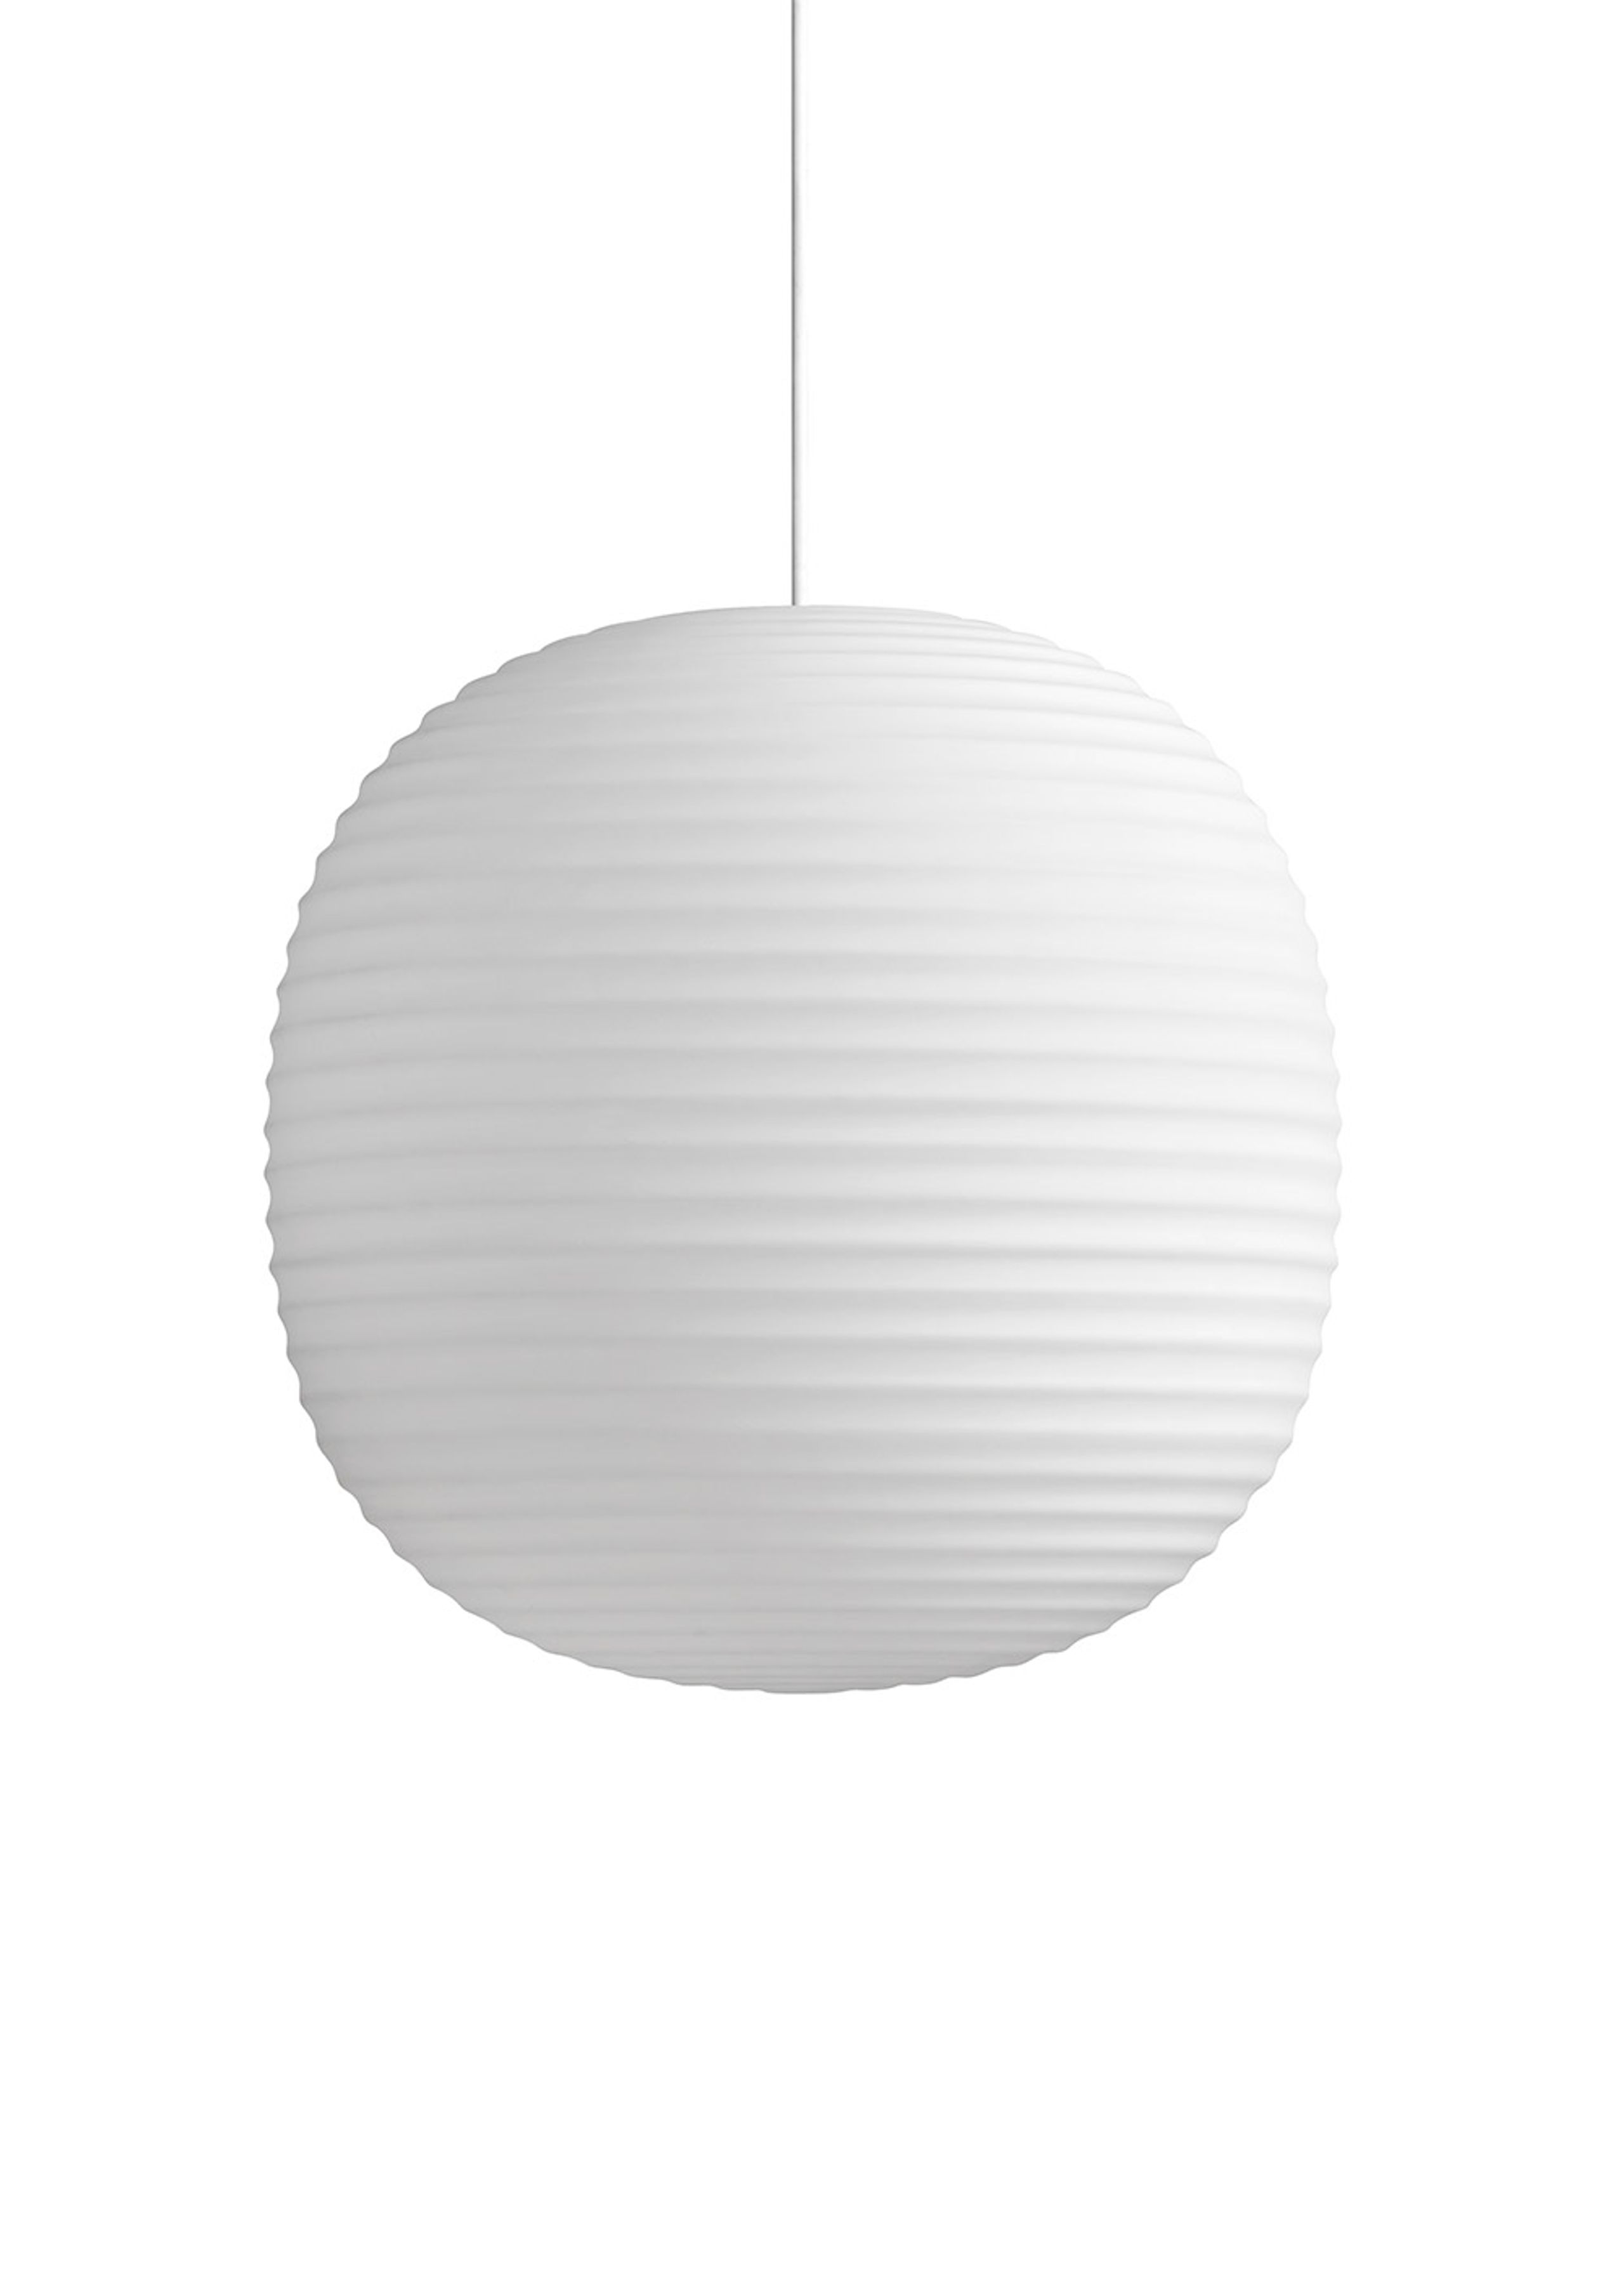 New Works - Pendule - Lantern Pendant Lamp - Large